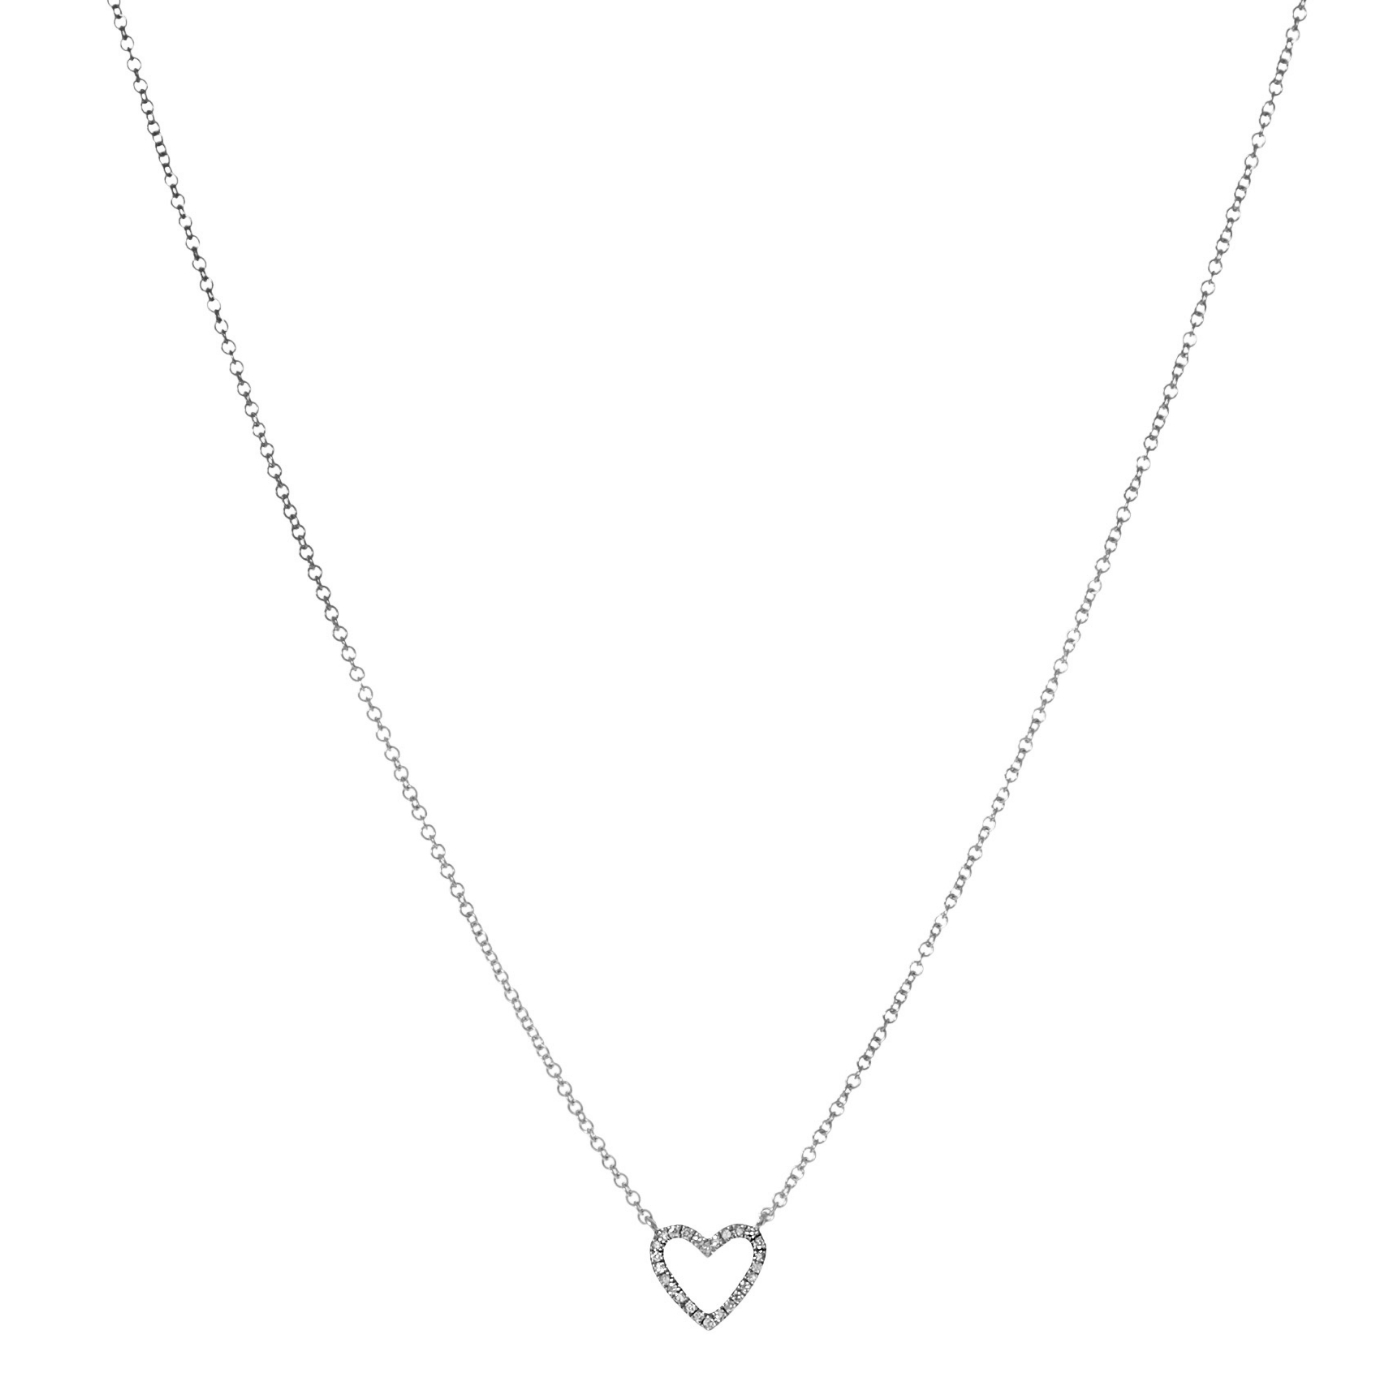 Rainbow Heart Necklace – Elisabeth Bell